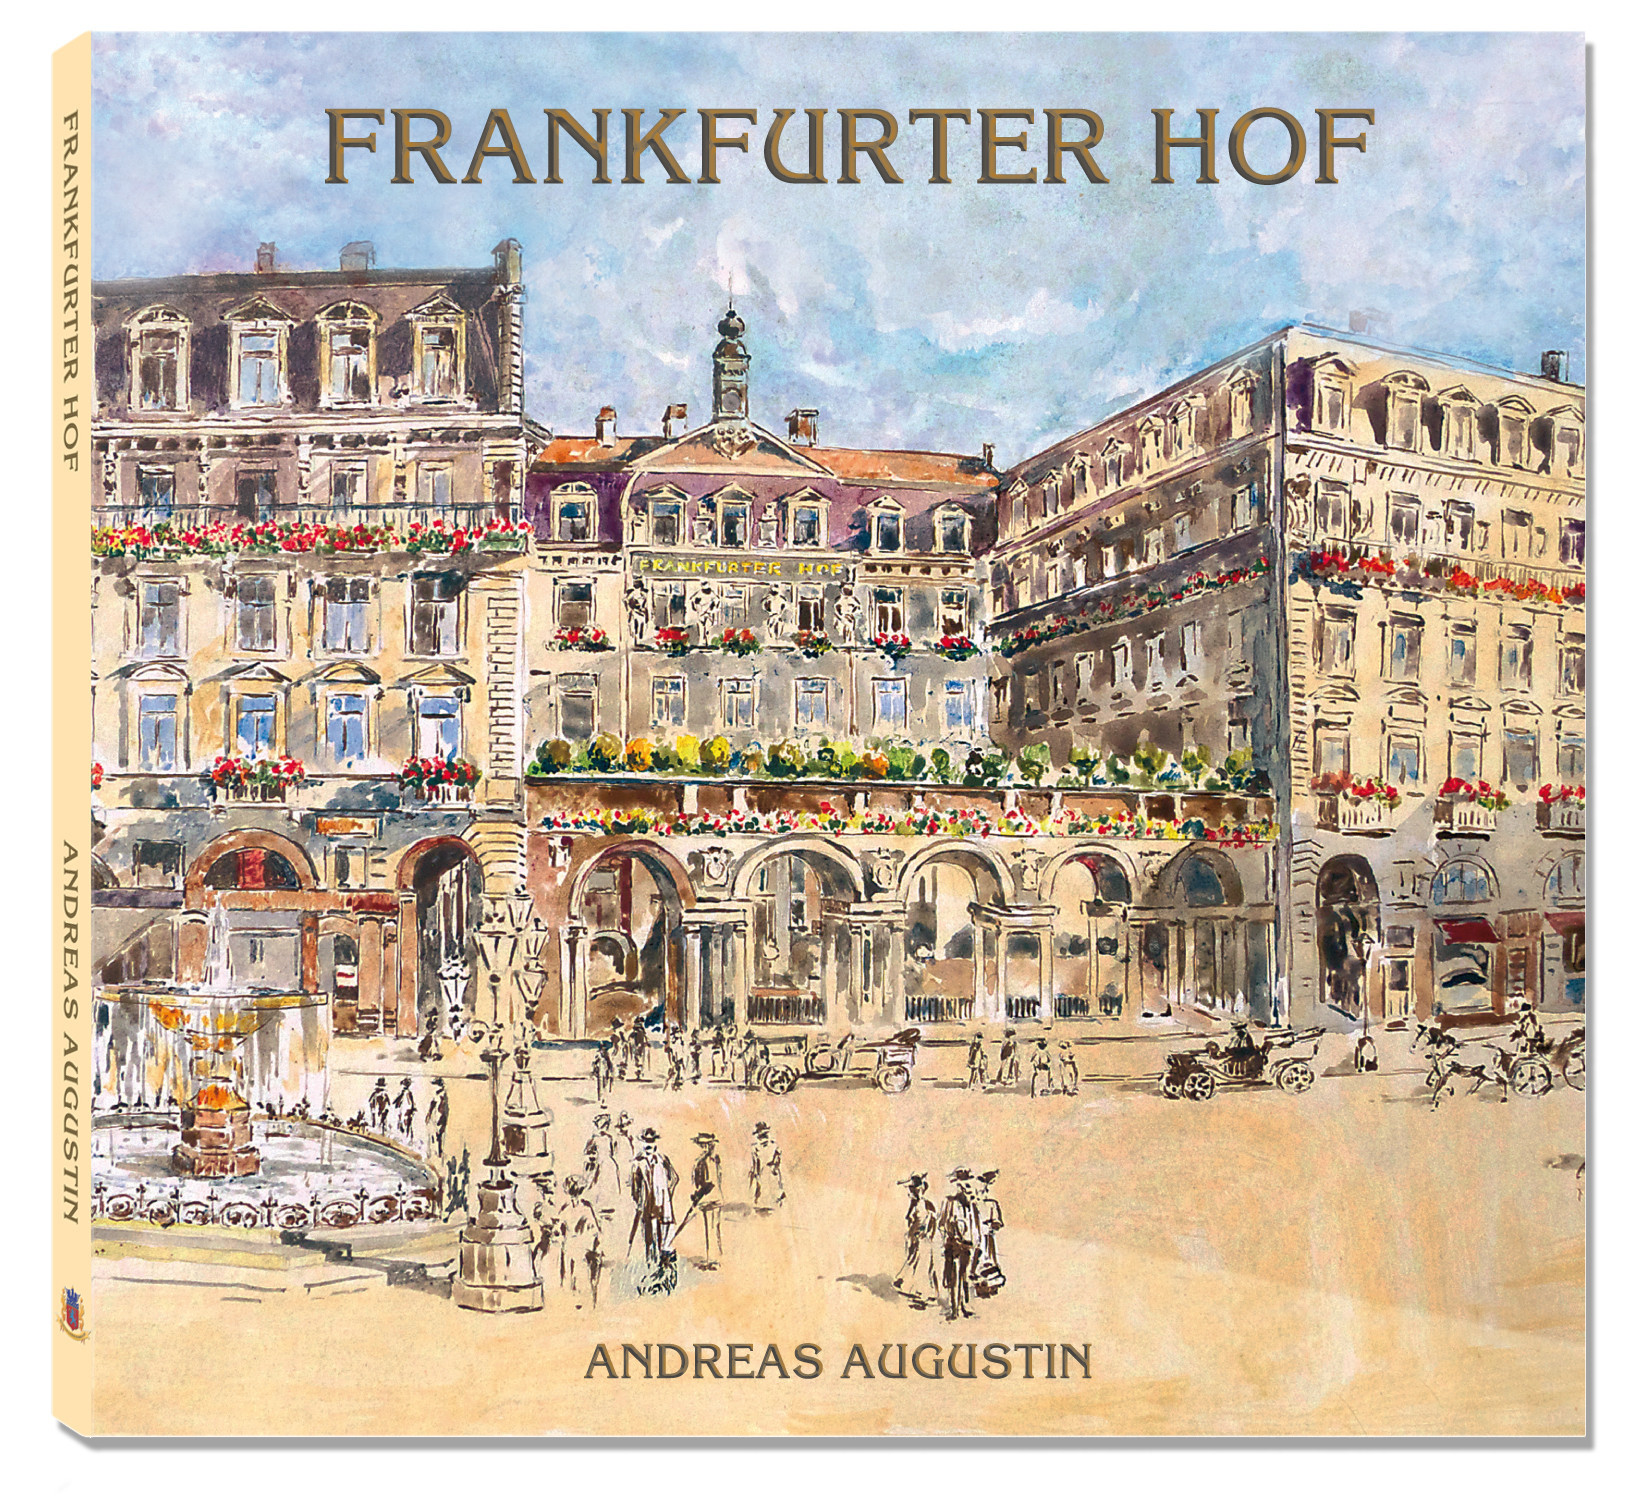 Frankfurter Hof Frankfurt Germany English Gift Edition Famoushotels Org